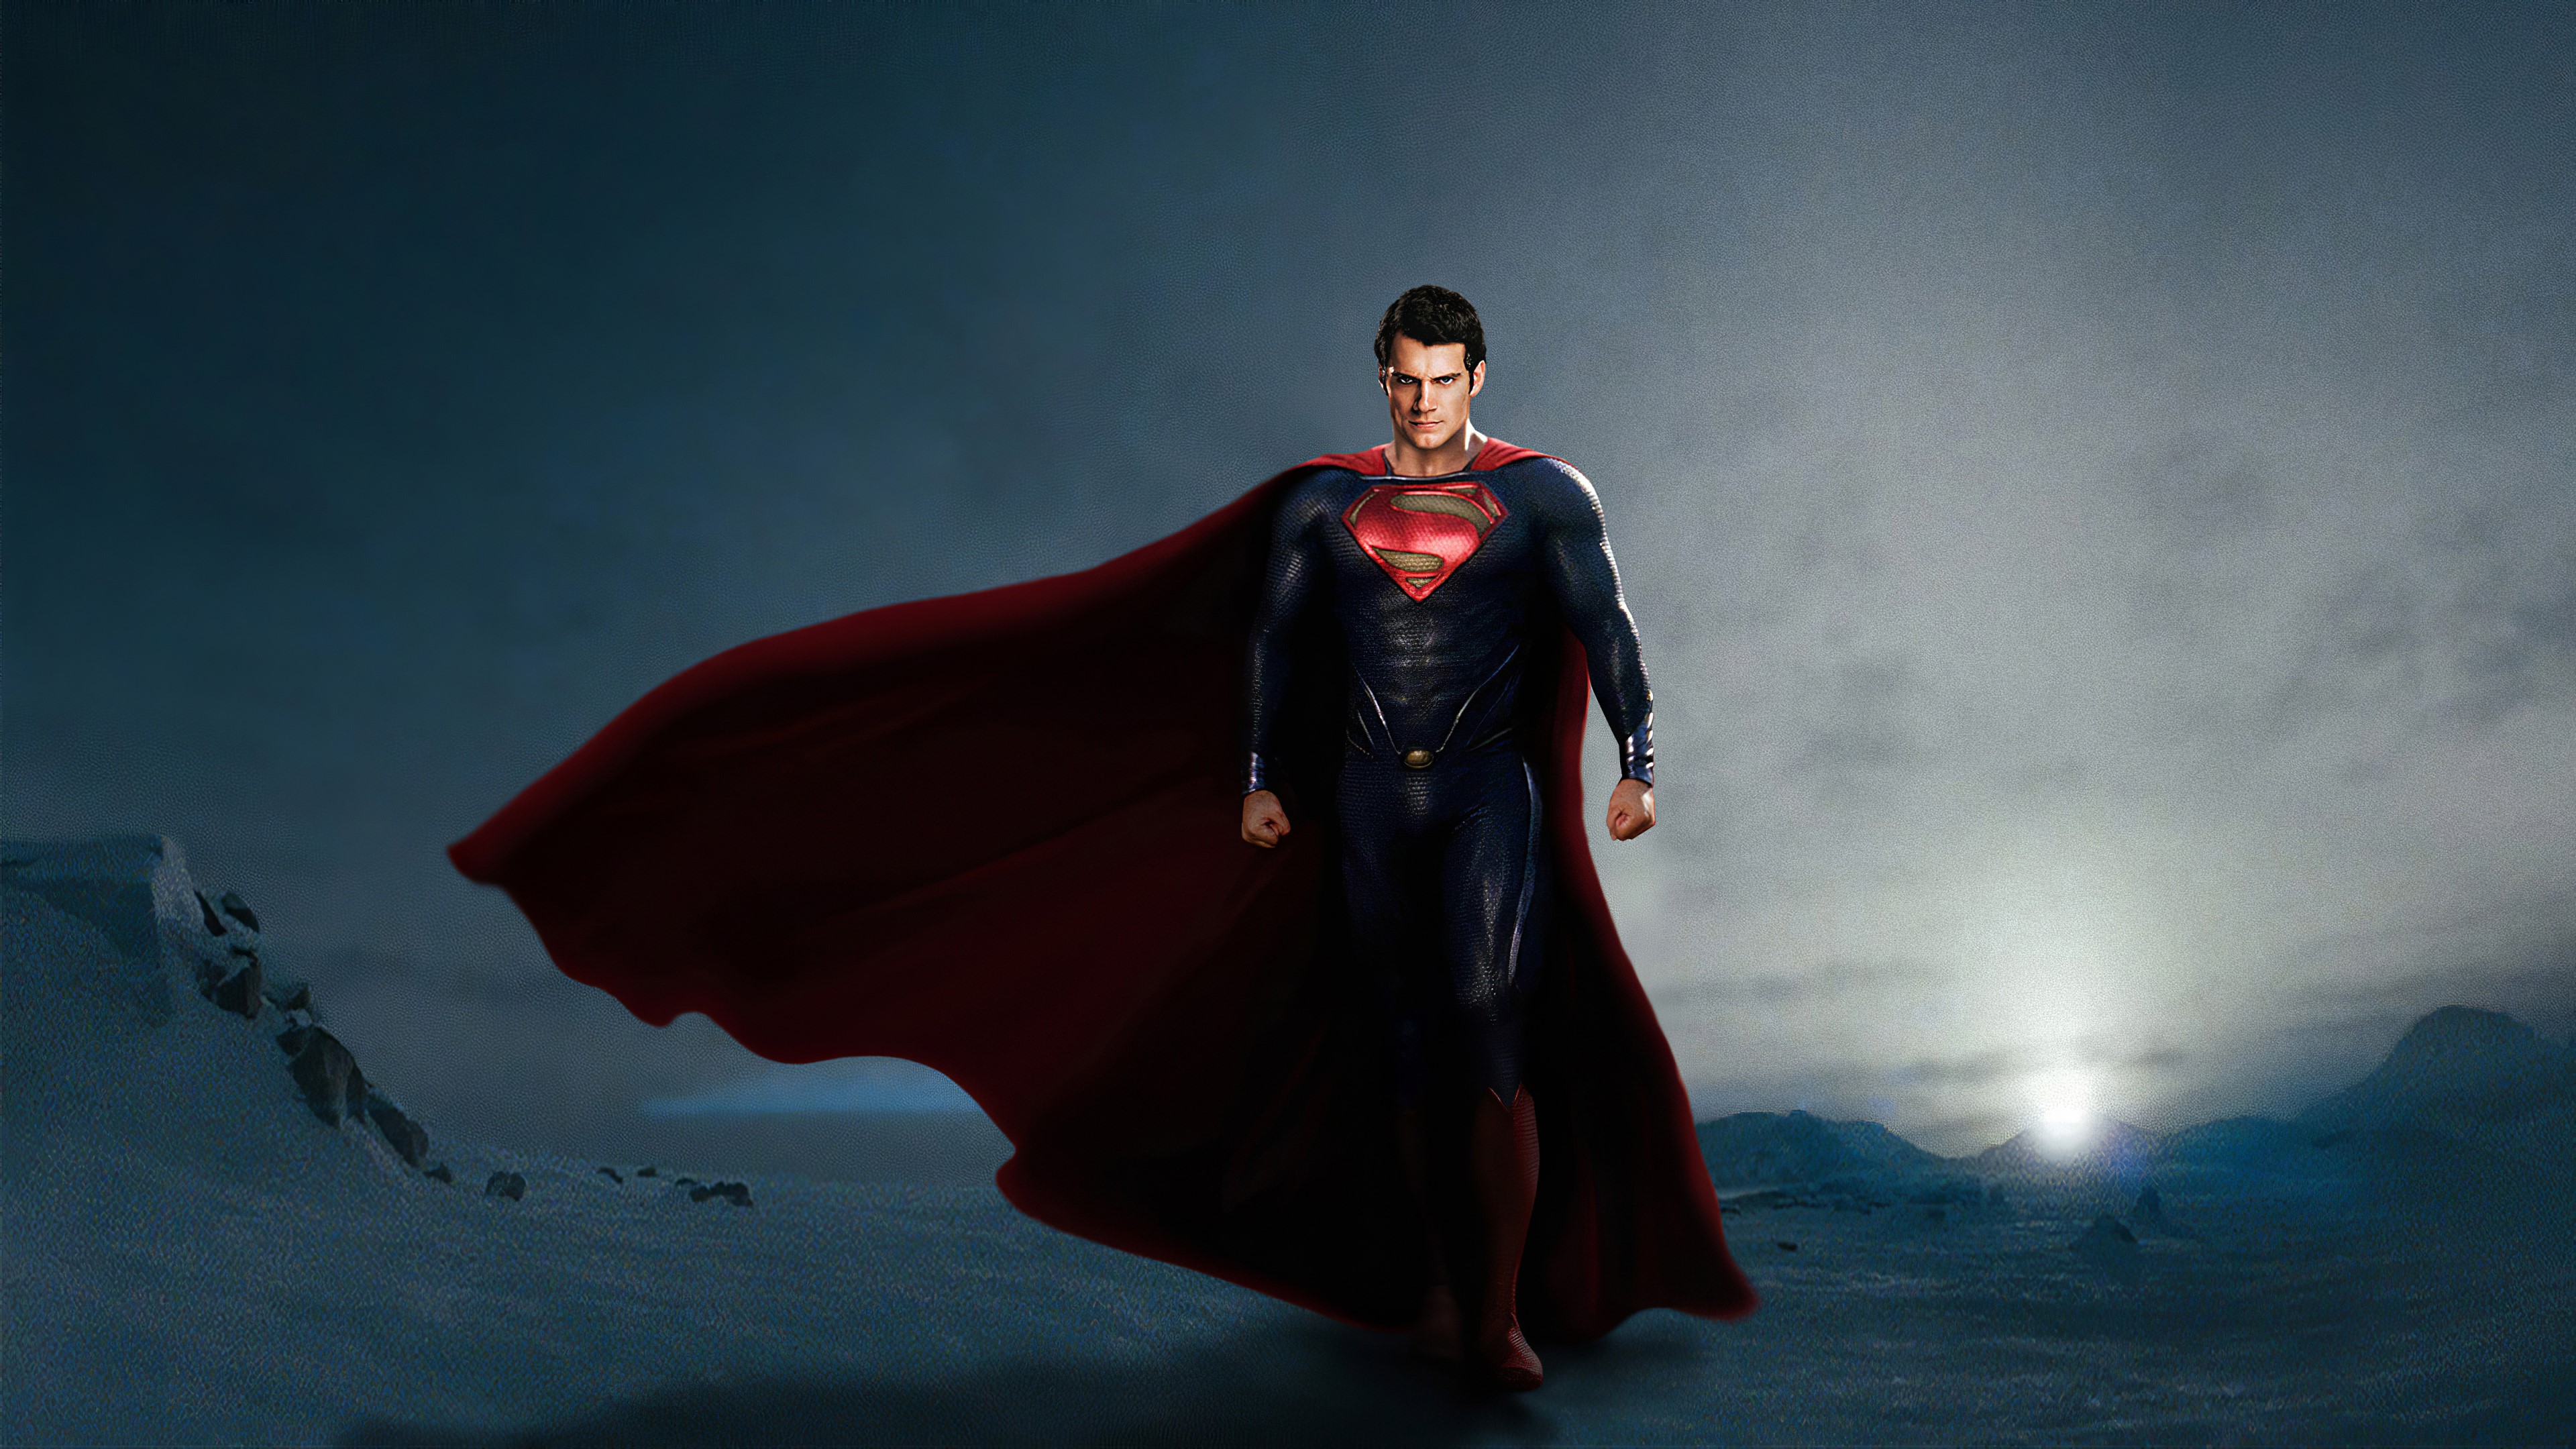 150+ 4K Superman Fondos de pantalla | Fondos de Escritorio